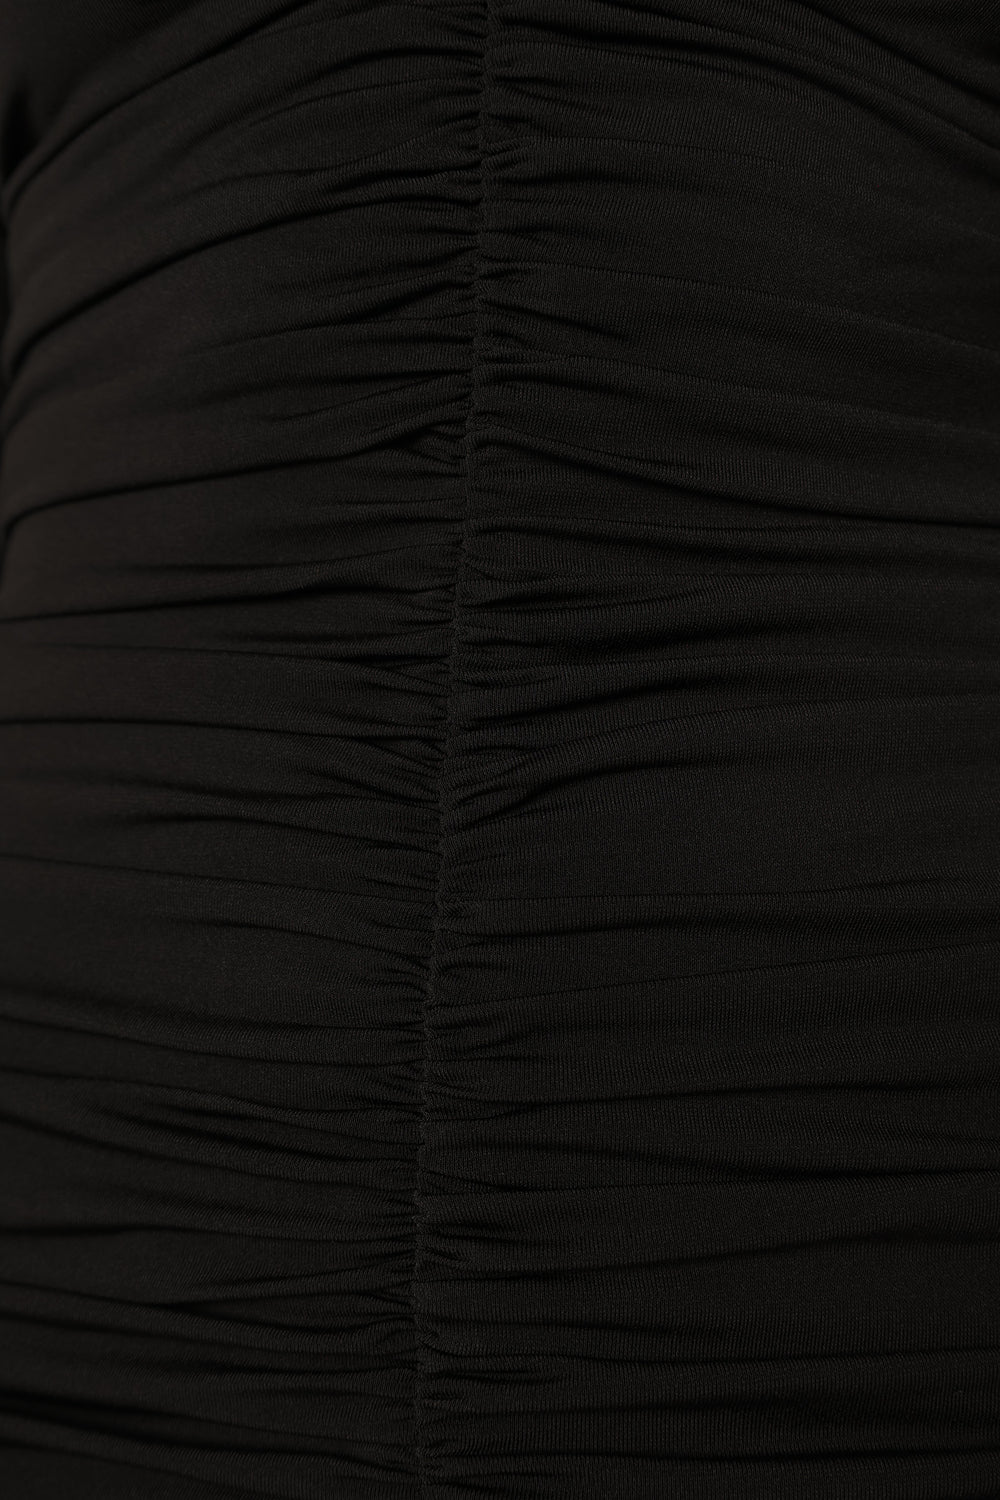 Petal and Pup USA DRESSES Carissa Long Sleeve Mini Dress - Black